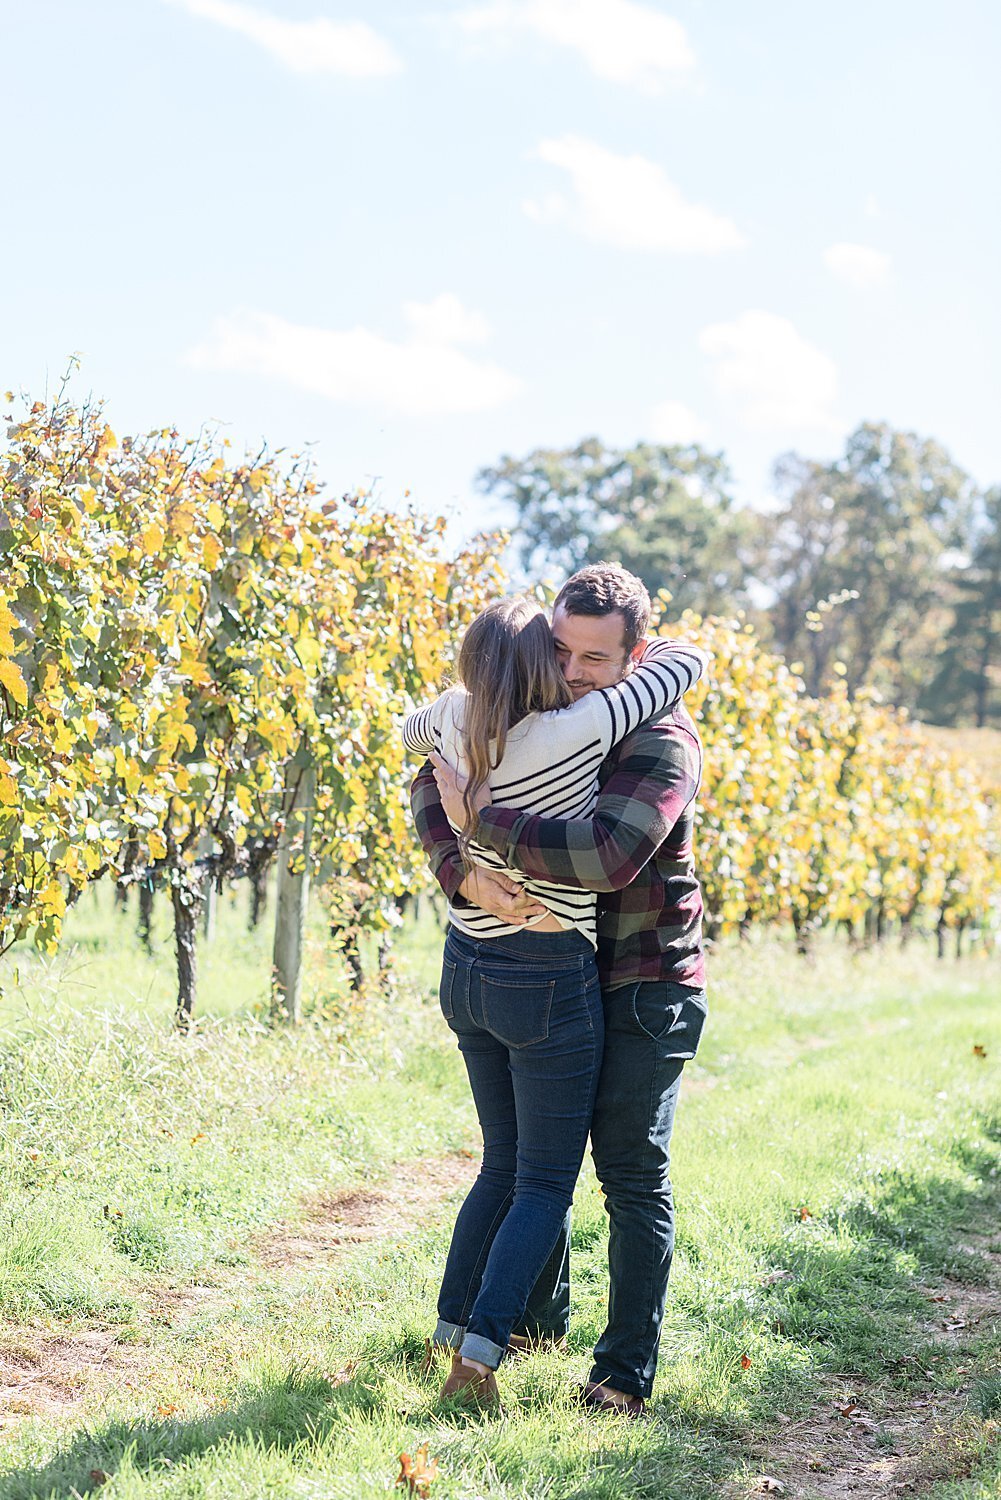 WayVine Vineyard Winery Surprise Proposal Engagement Photography PA_8500.jpg